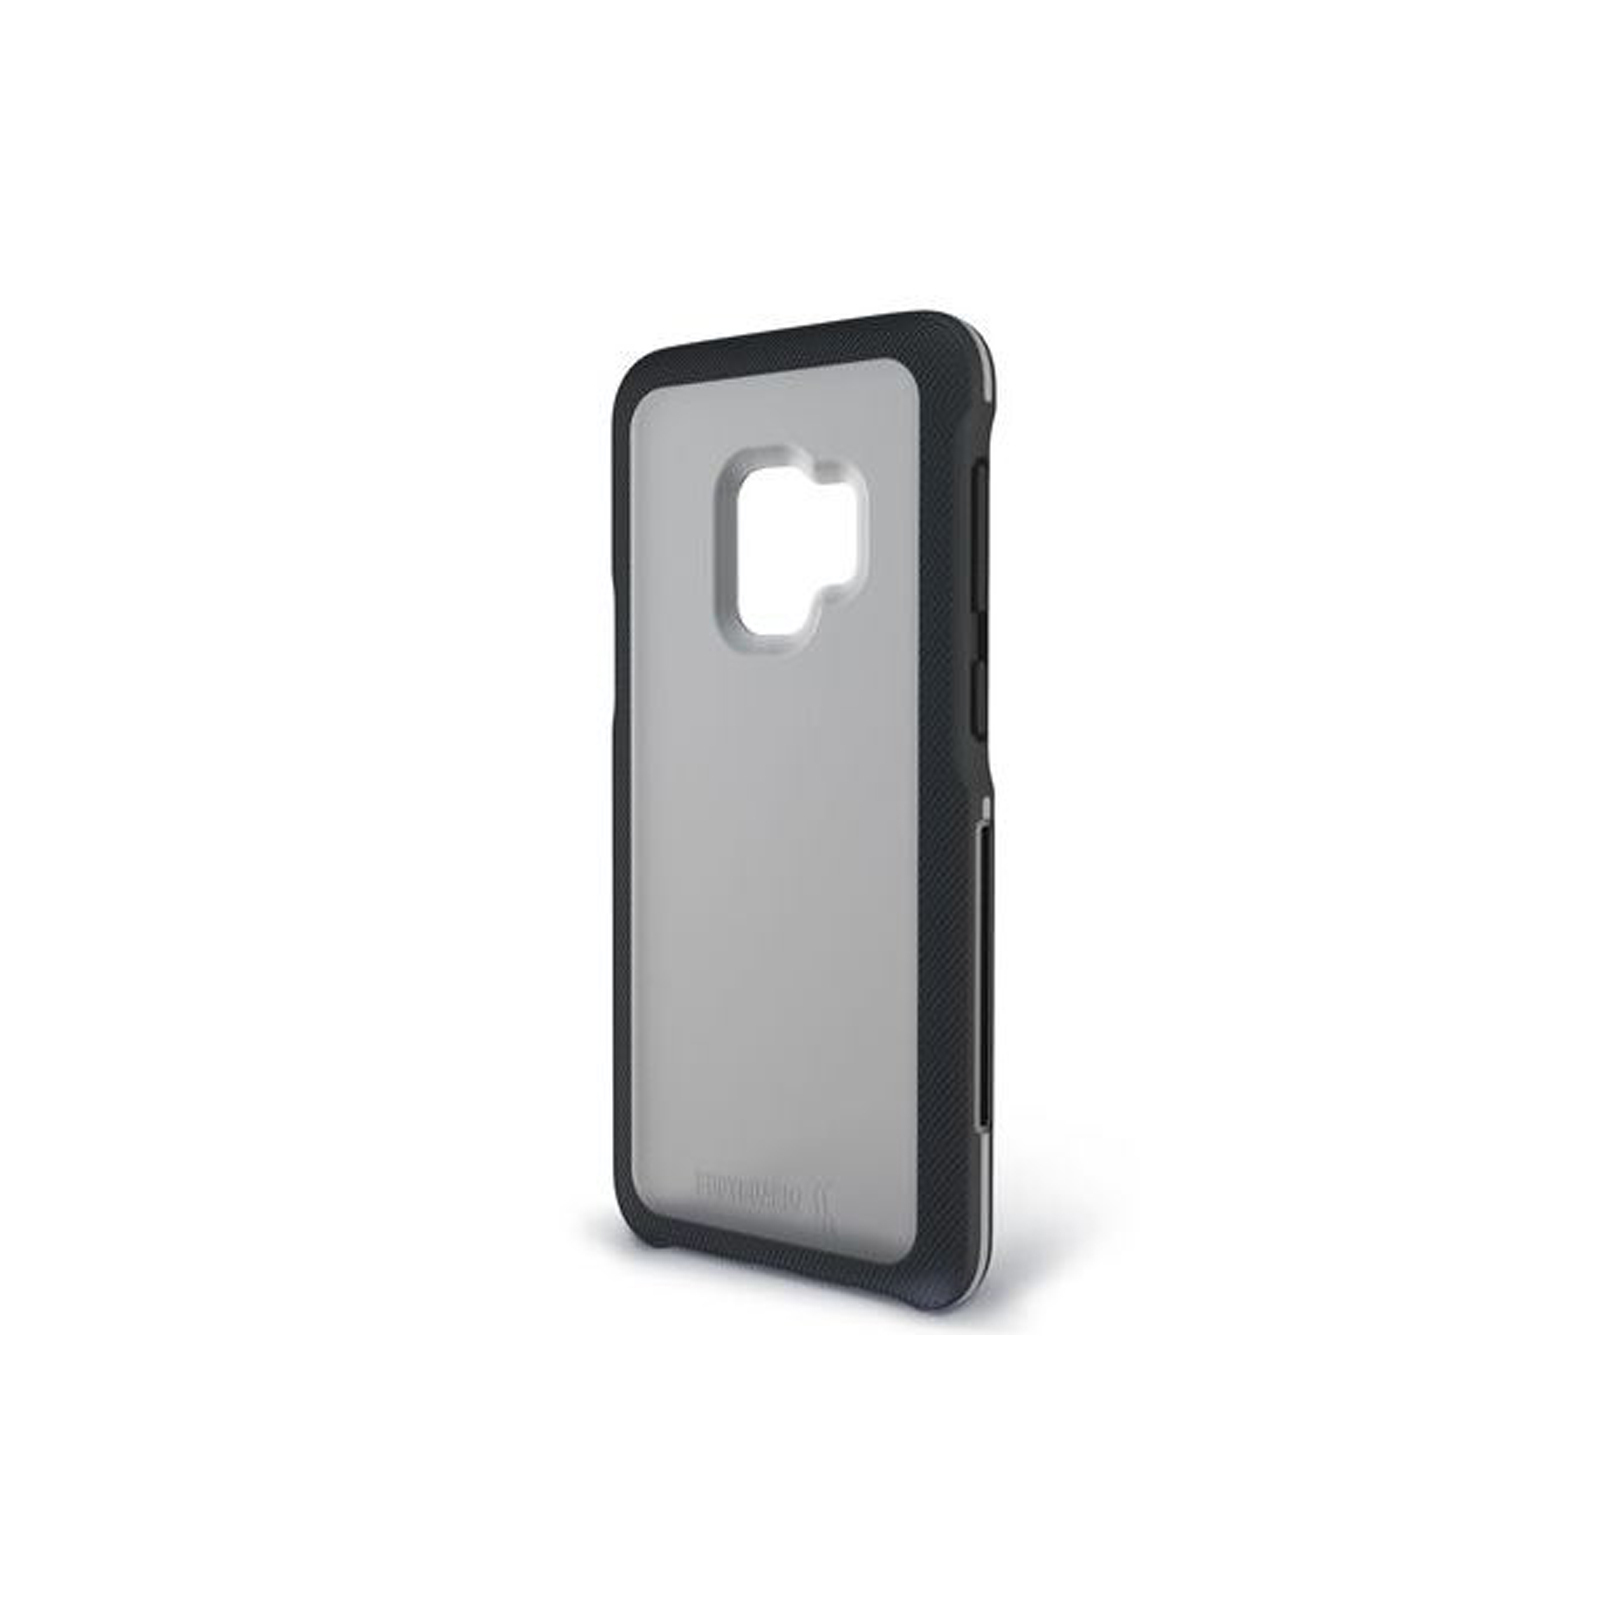 TrainrPro Samsung Galaxy S9 W / O Band Case [Black / Gray]